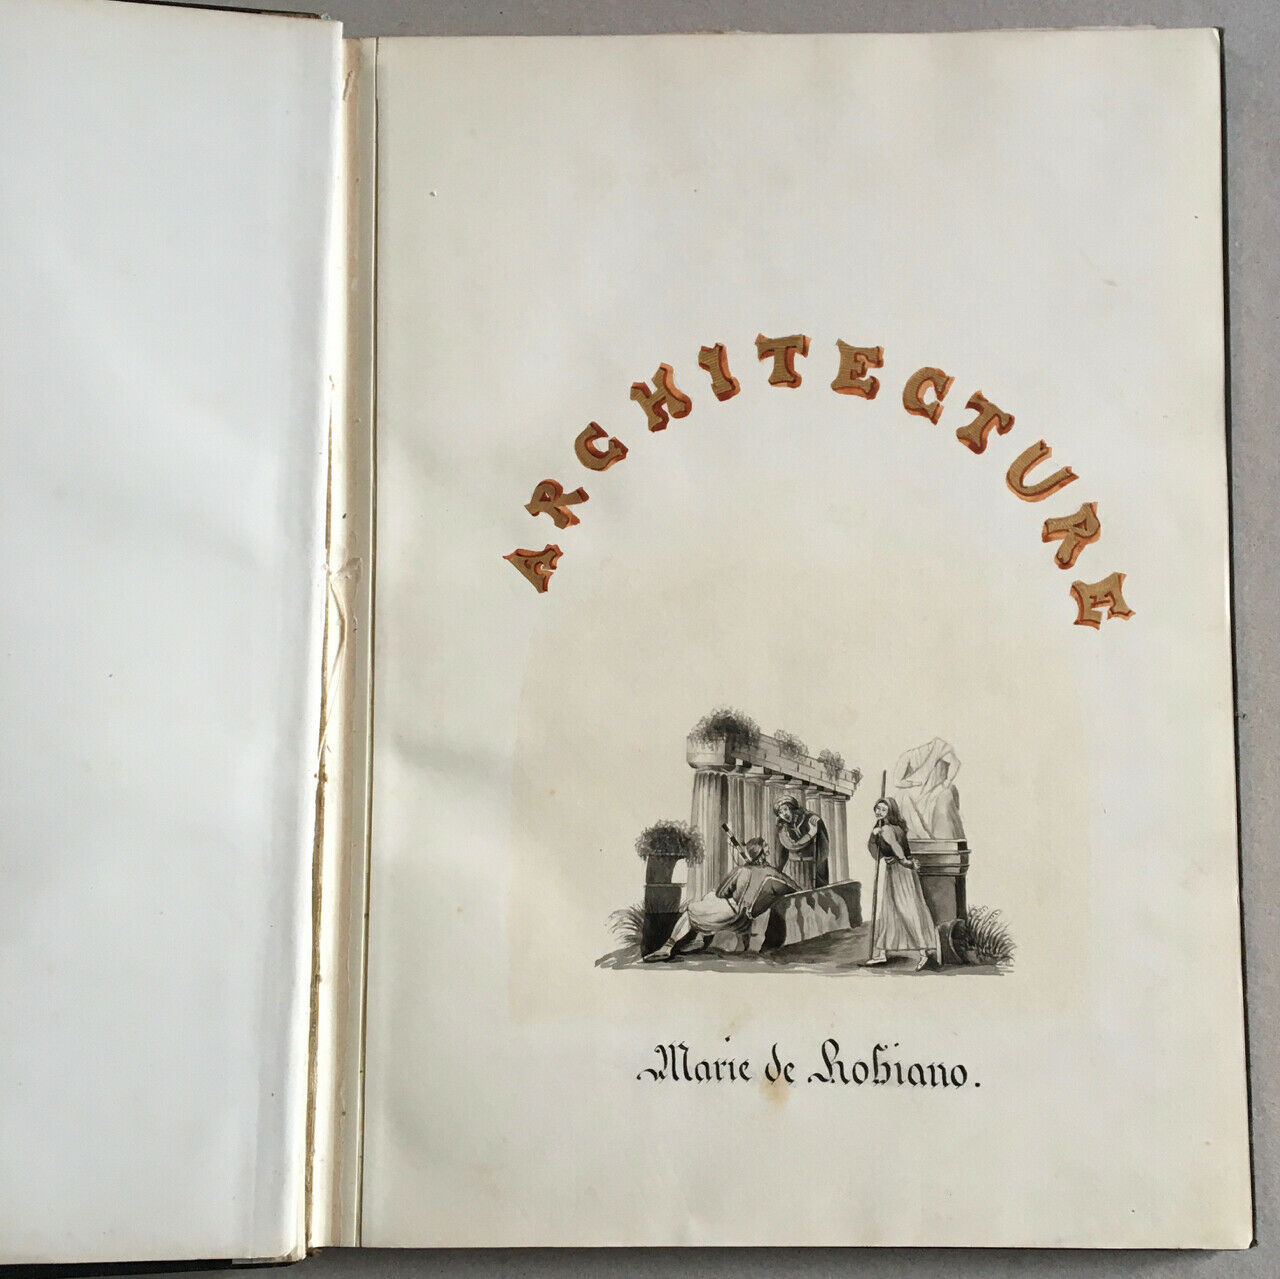 Album d'aquarelles d'architecture, œuvre d'une jeune aristocrate belge — c. 1850